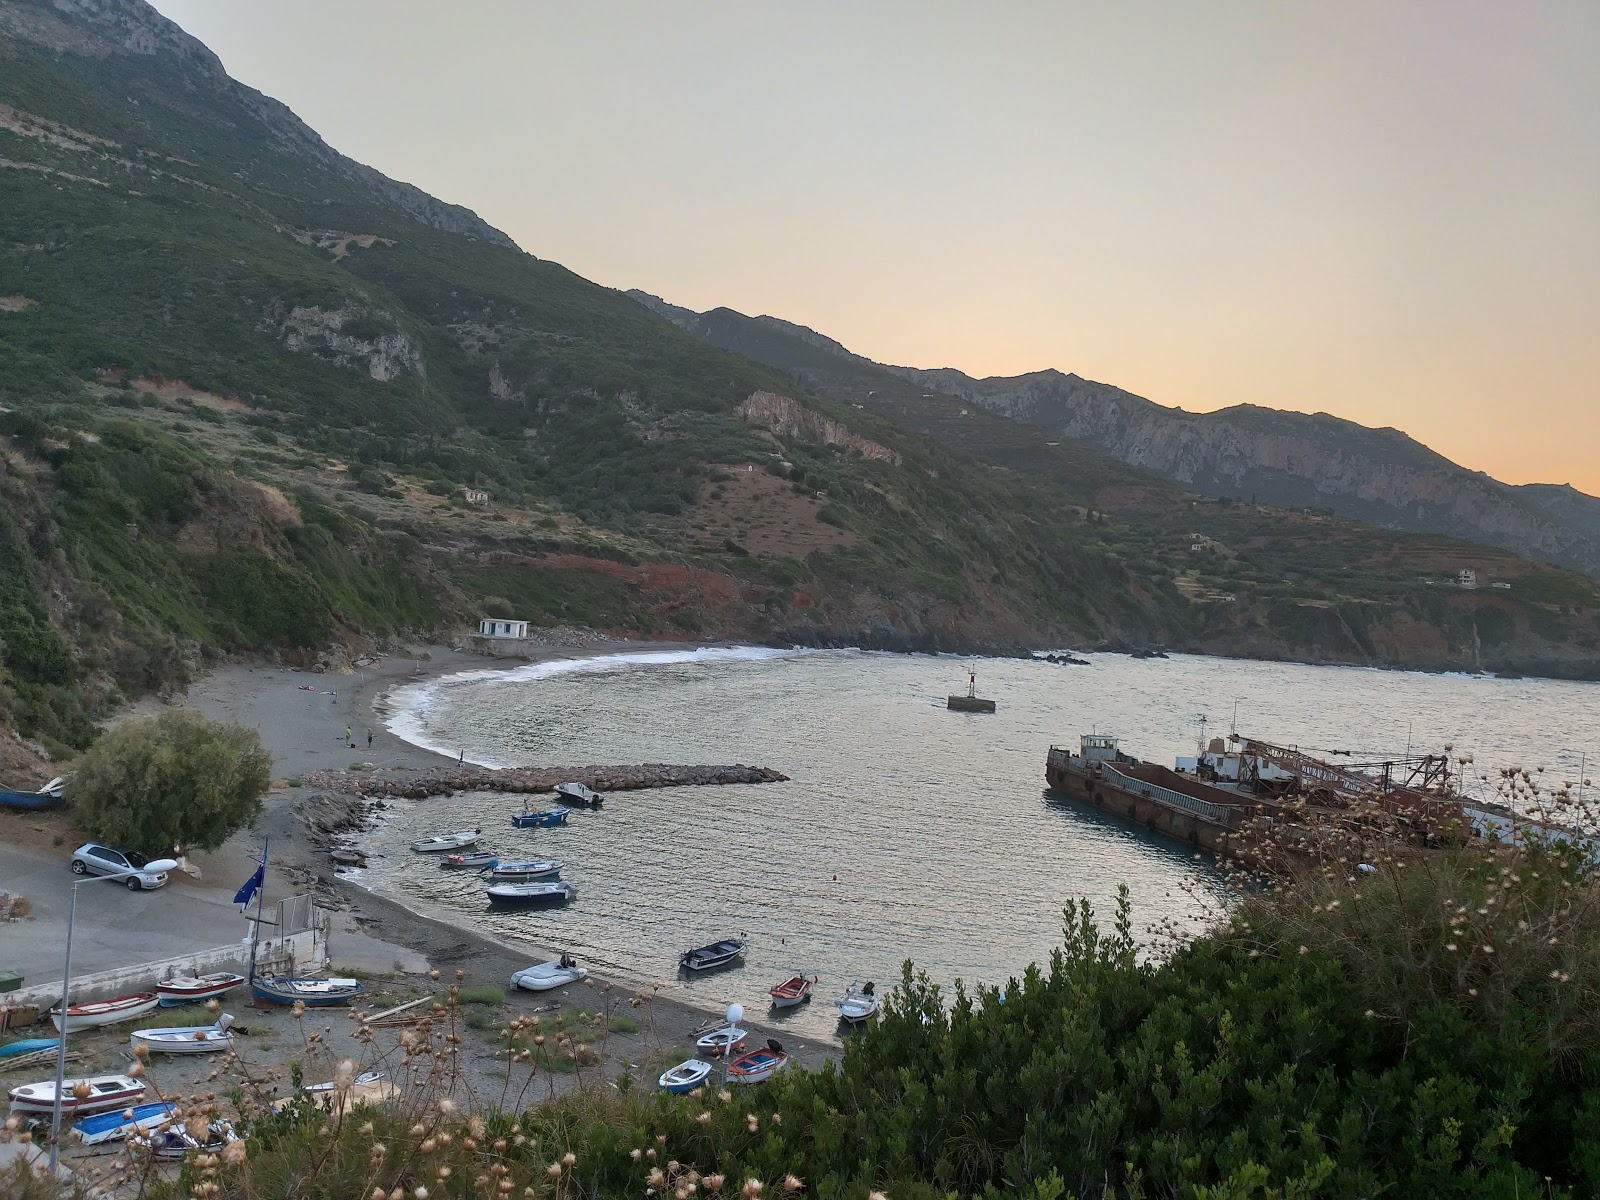 Fotografija Panagia beach z sivi kamenček površino